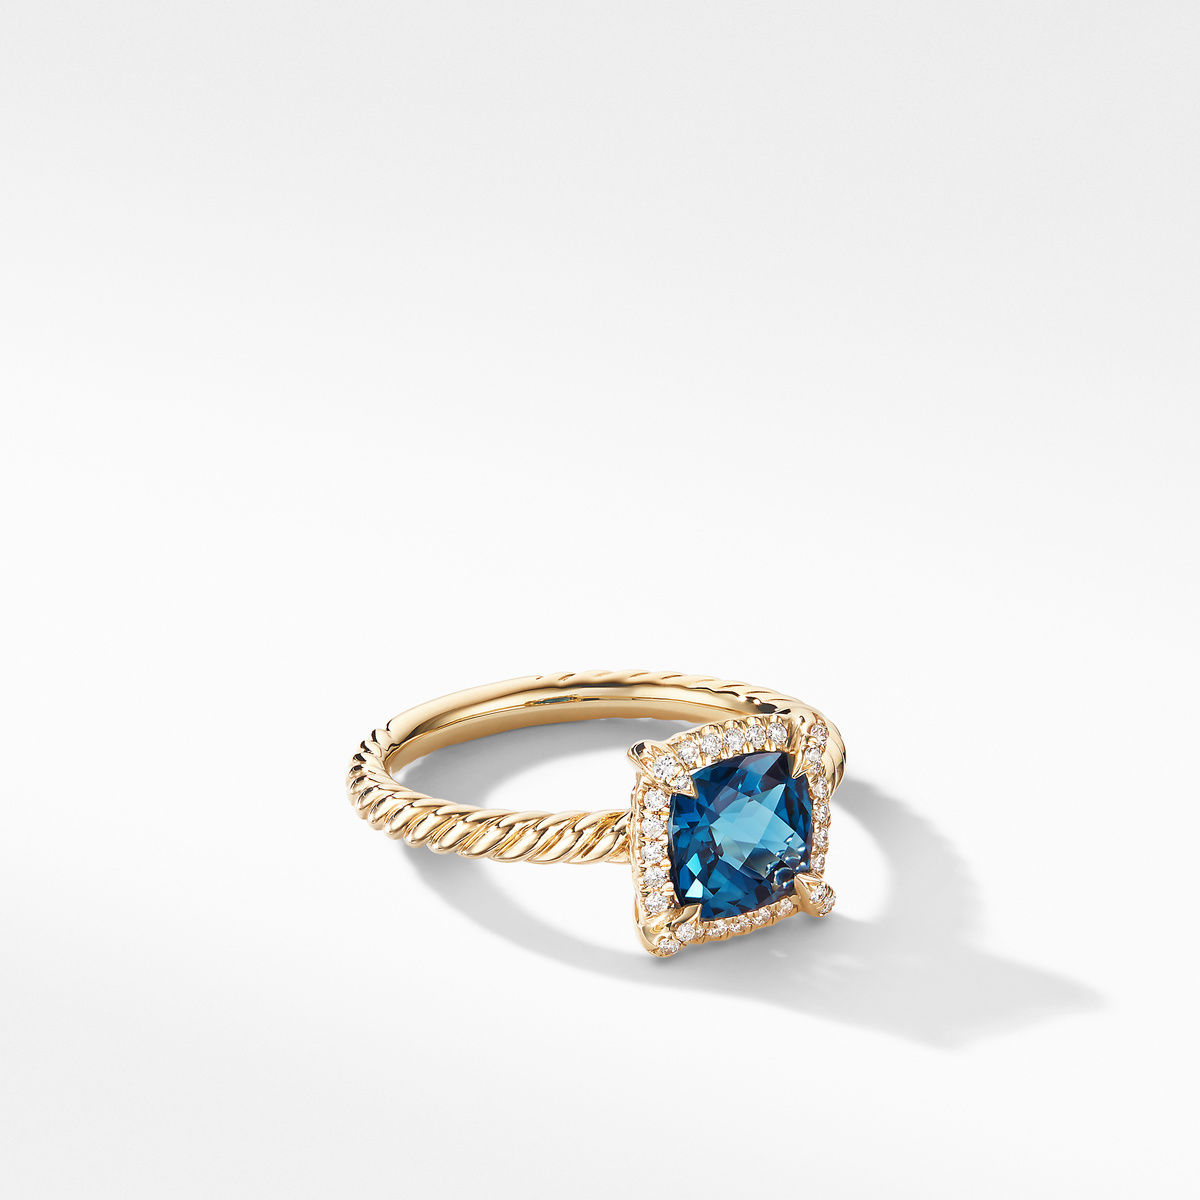 David Yurman Petite Chatelaine Pave Bezel Ring in 18K Yellow Gold with Hampton Blue Topaz and Diamonds - Size 4.5